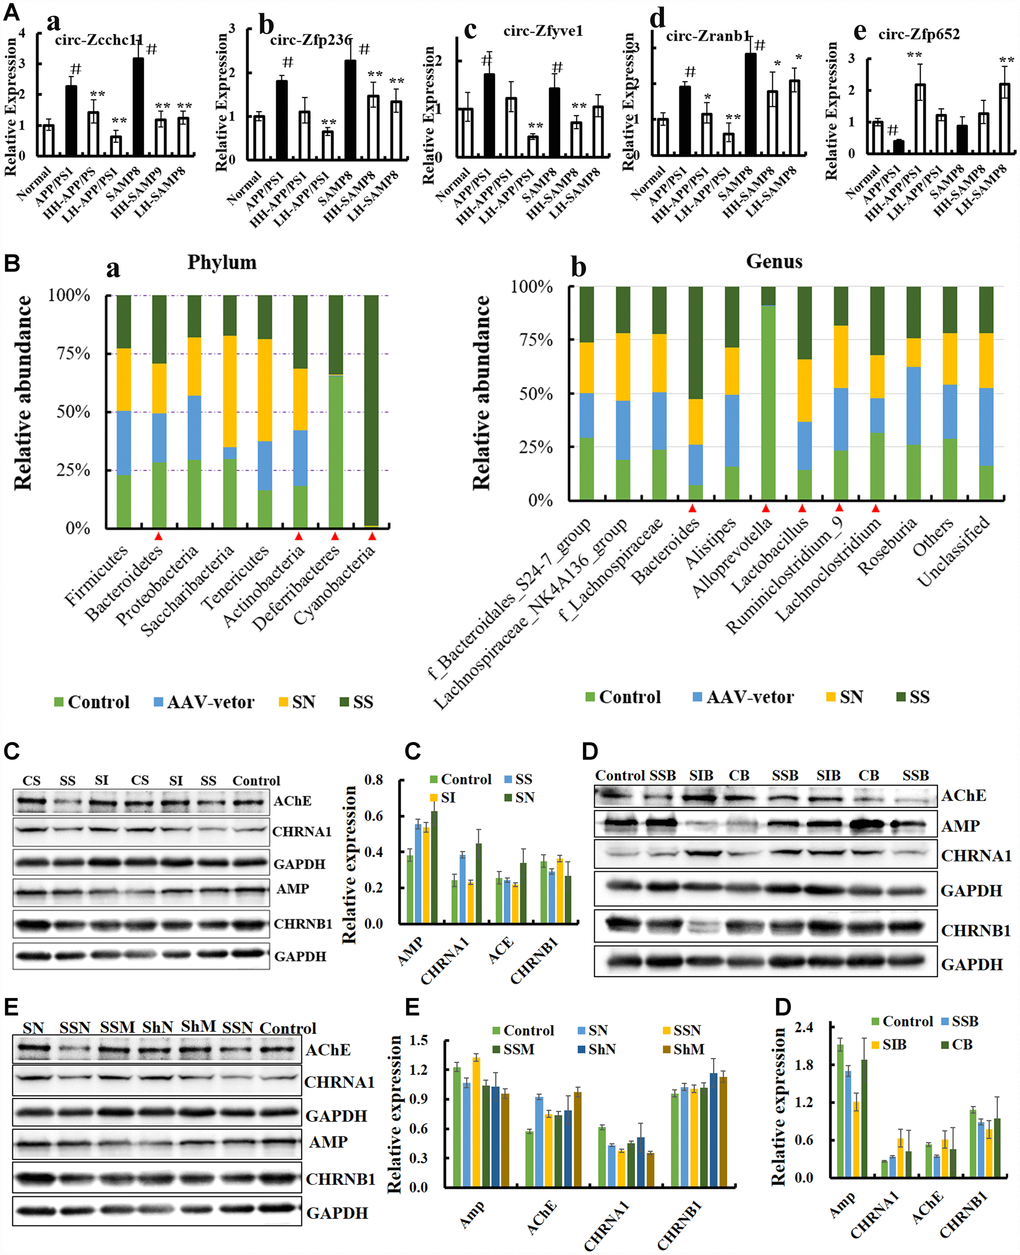 CircRNA NF1-419 influences the gut microbiota composition and cholinergic system. (A) The circRNAs of circ